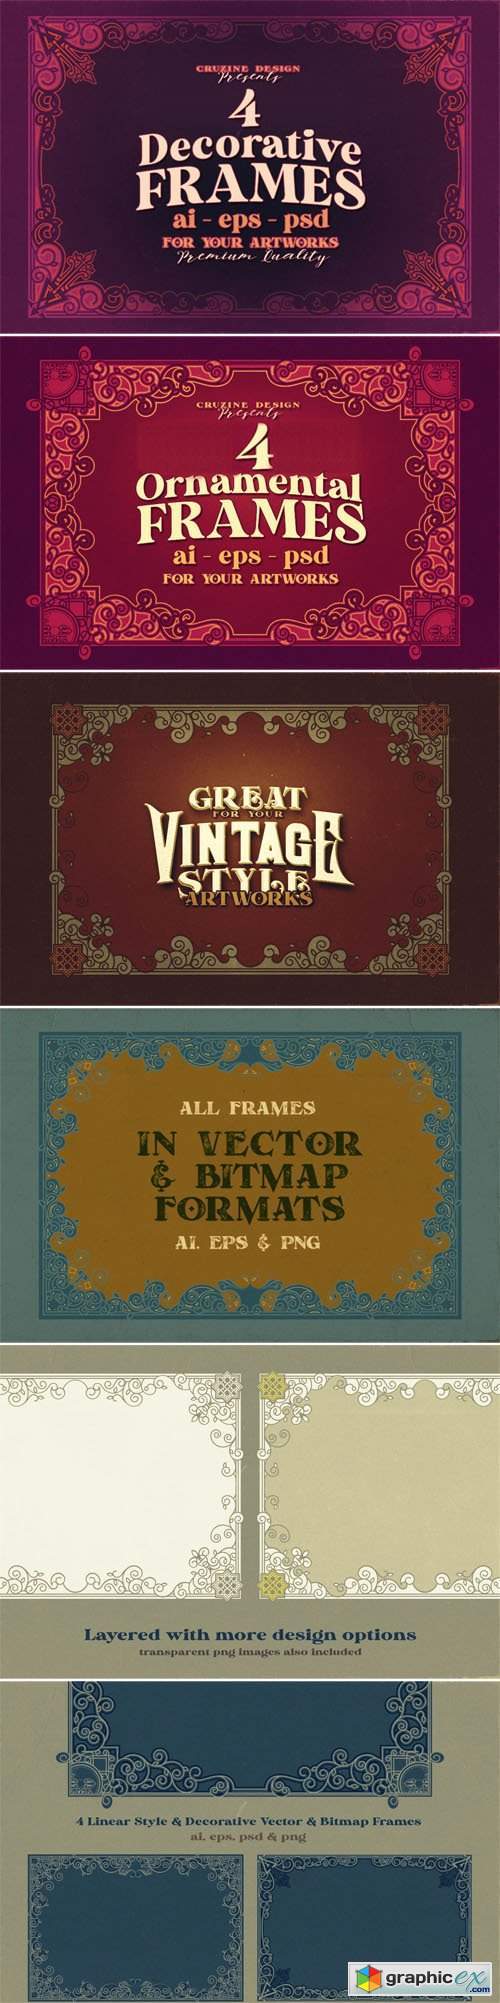 4 Decorative & Ornamental Frames Collection